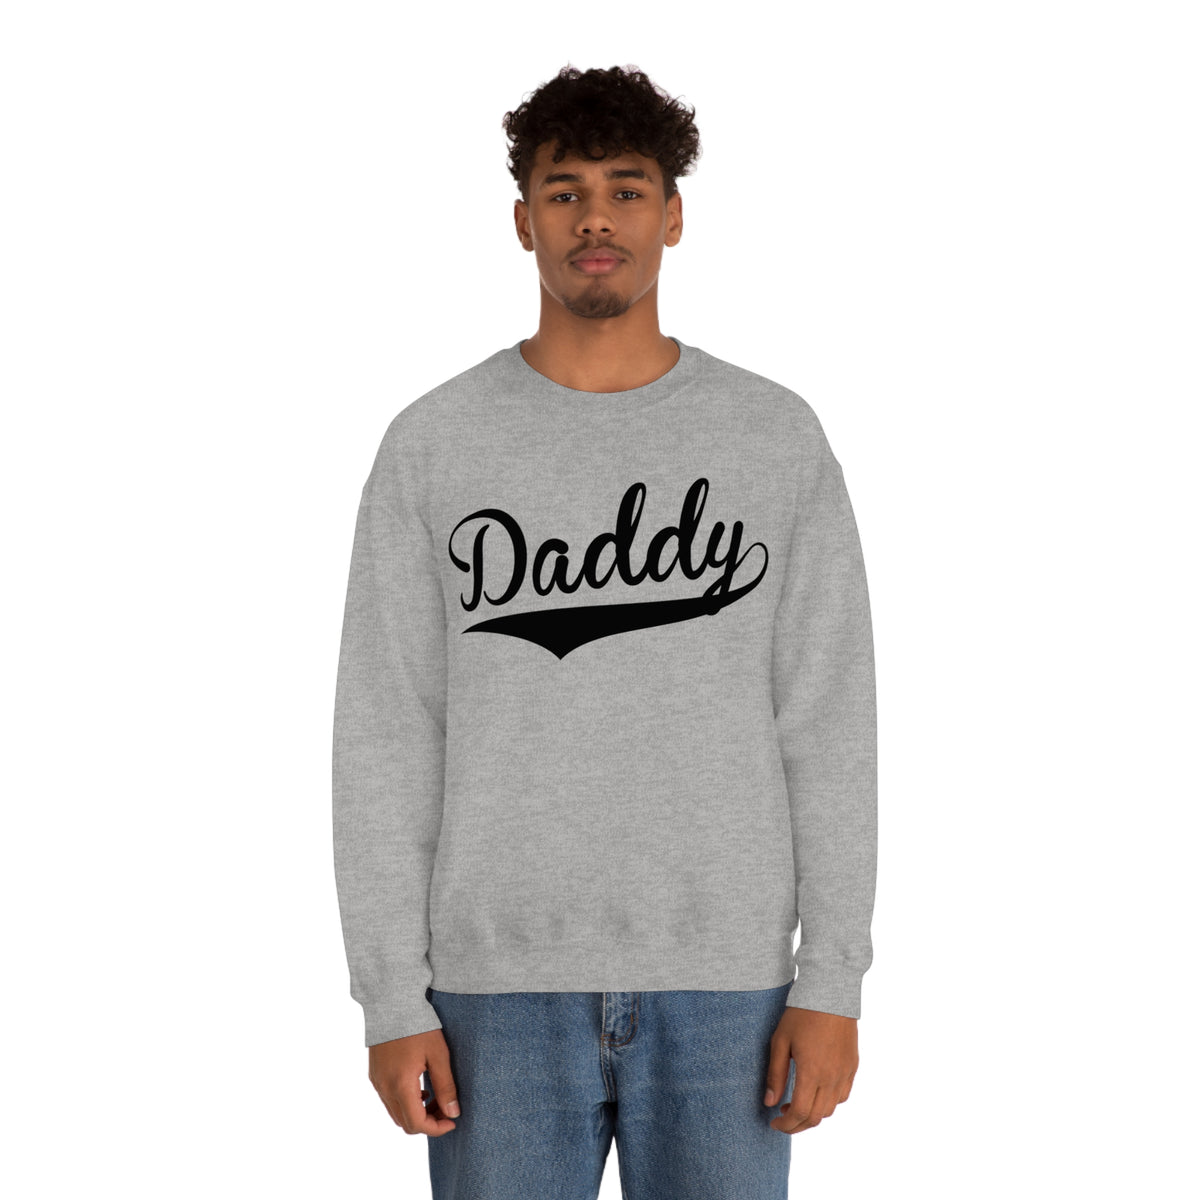 Daddy Pullover - Sweatshirt - Twisted Jezebel